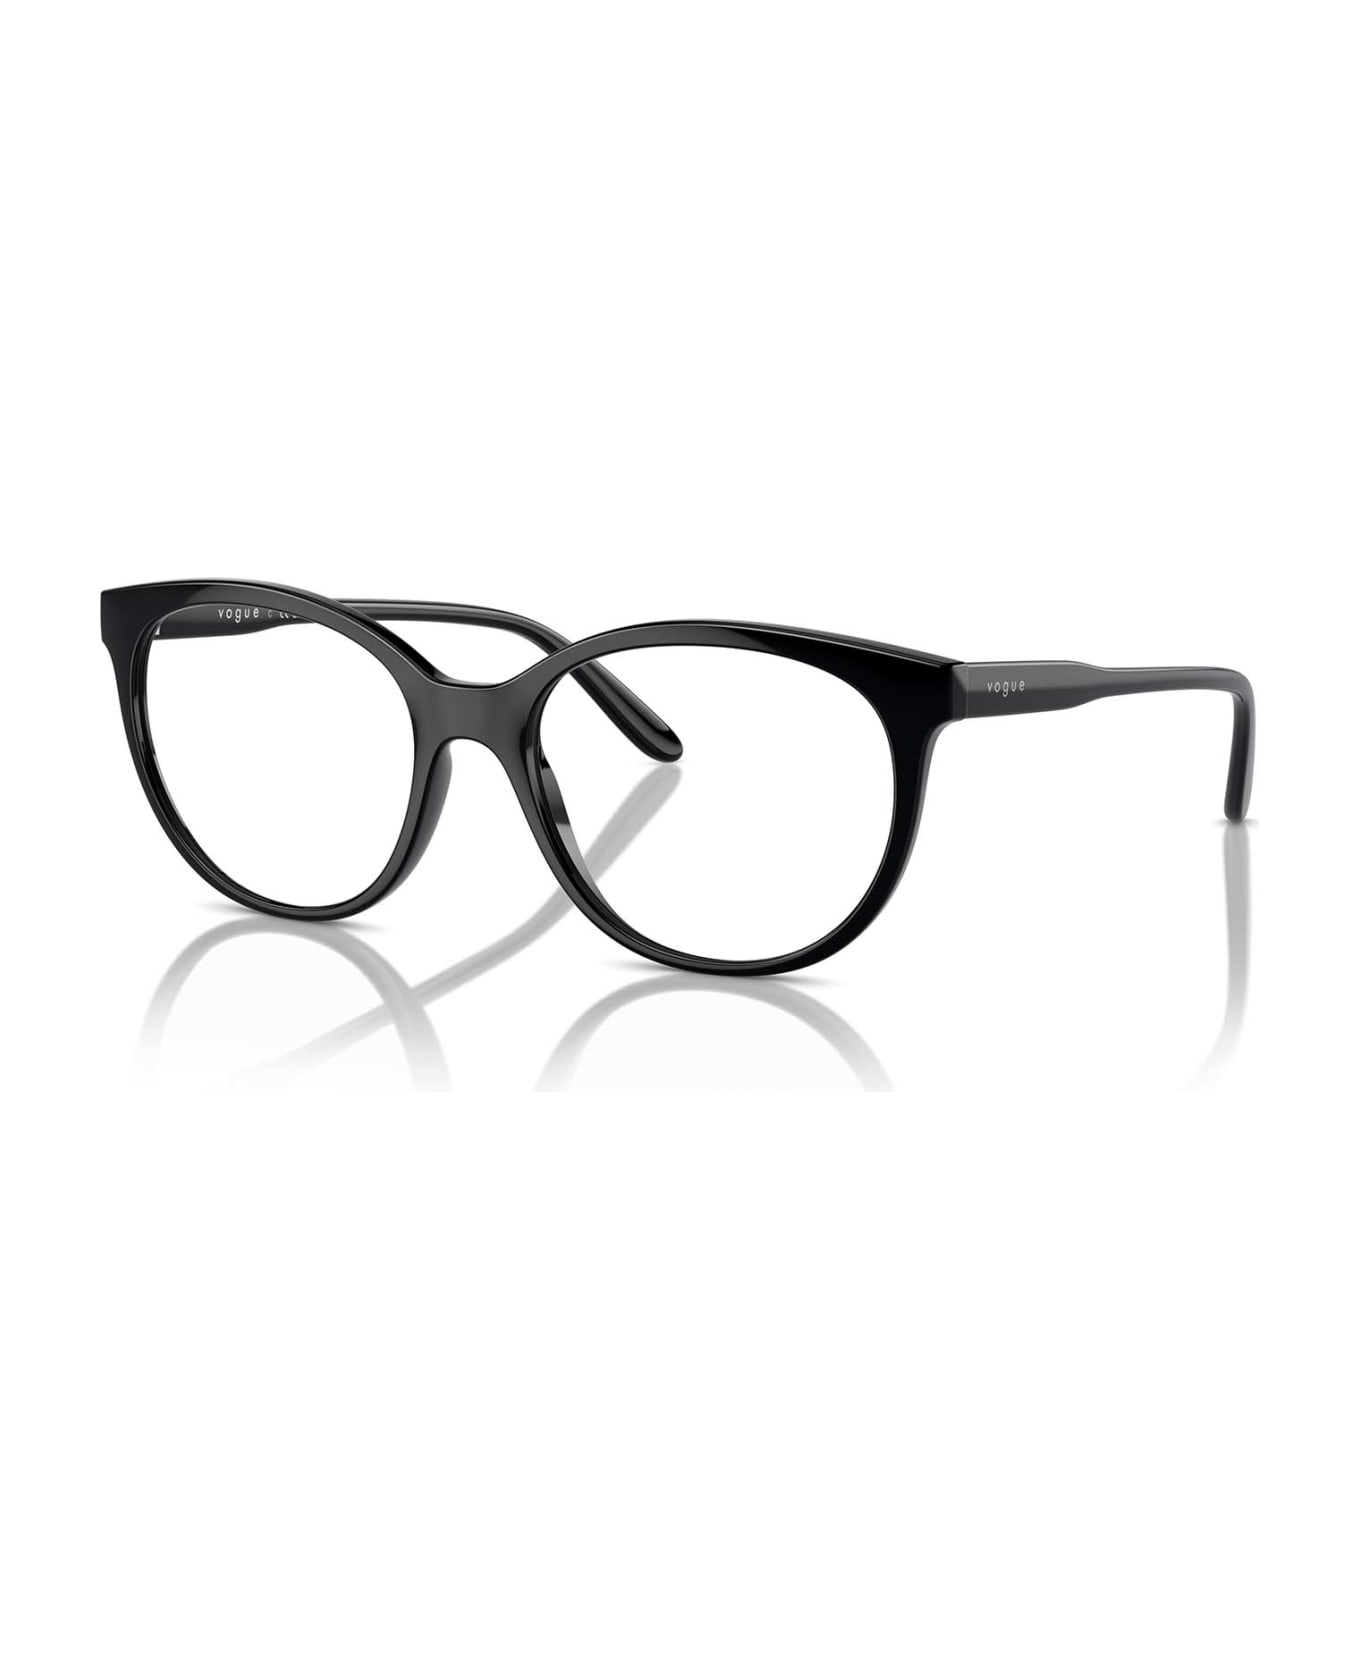 Vogue Eyewear Vo5552 Black Glasses - Black